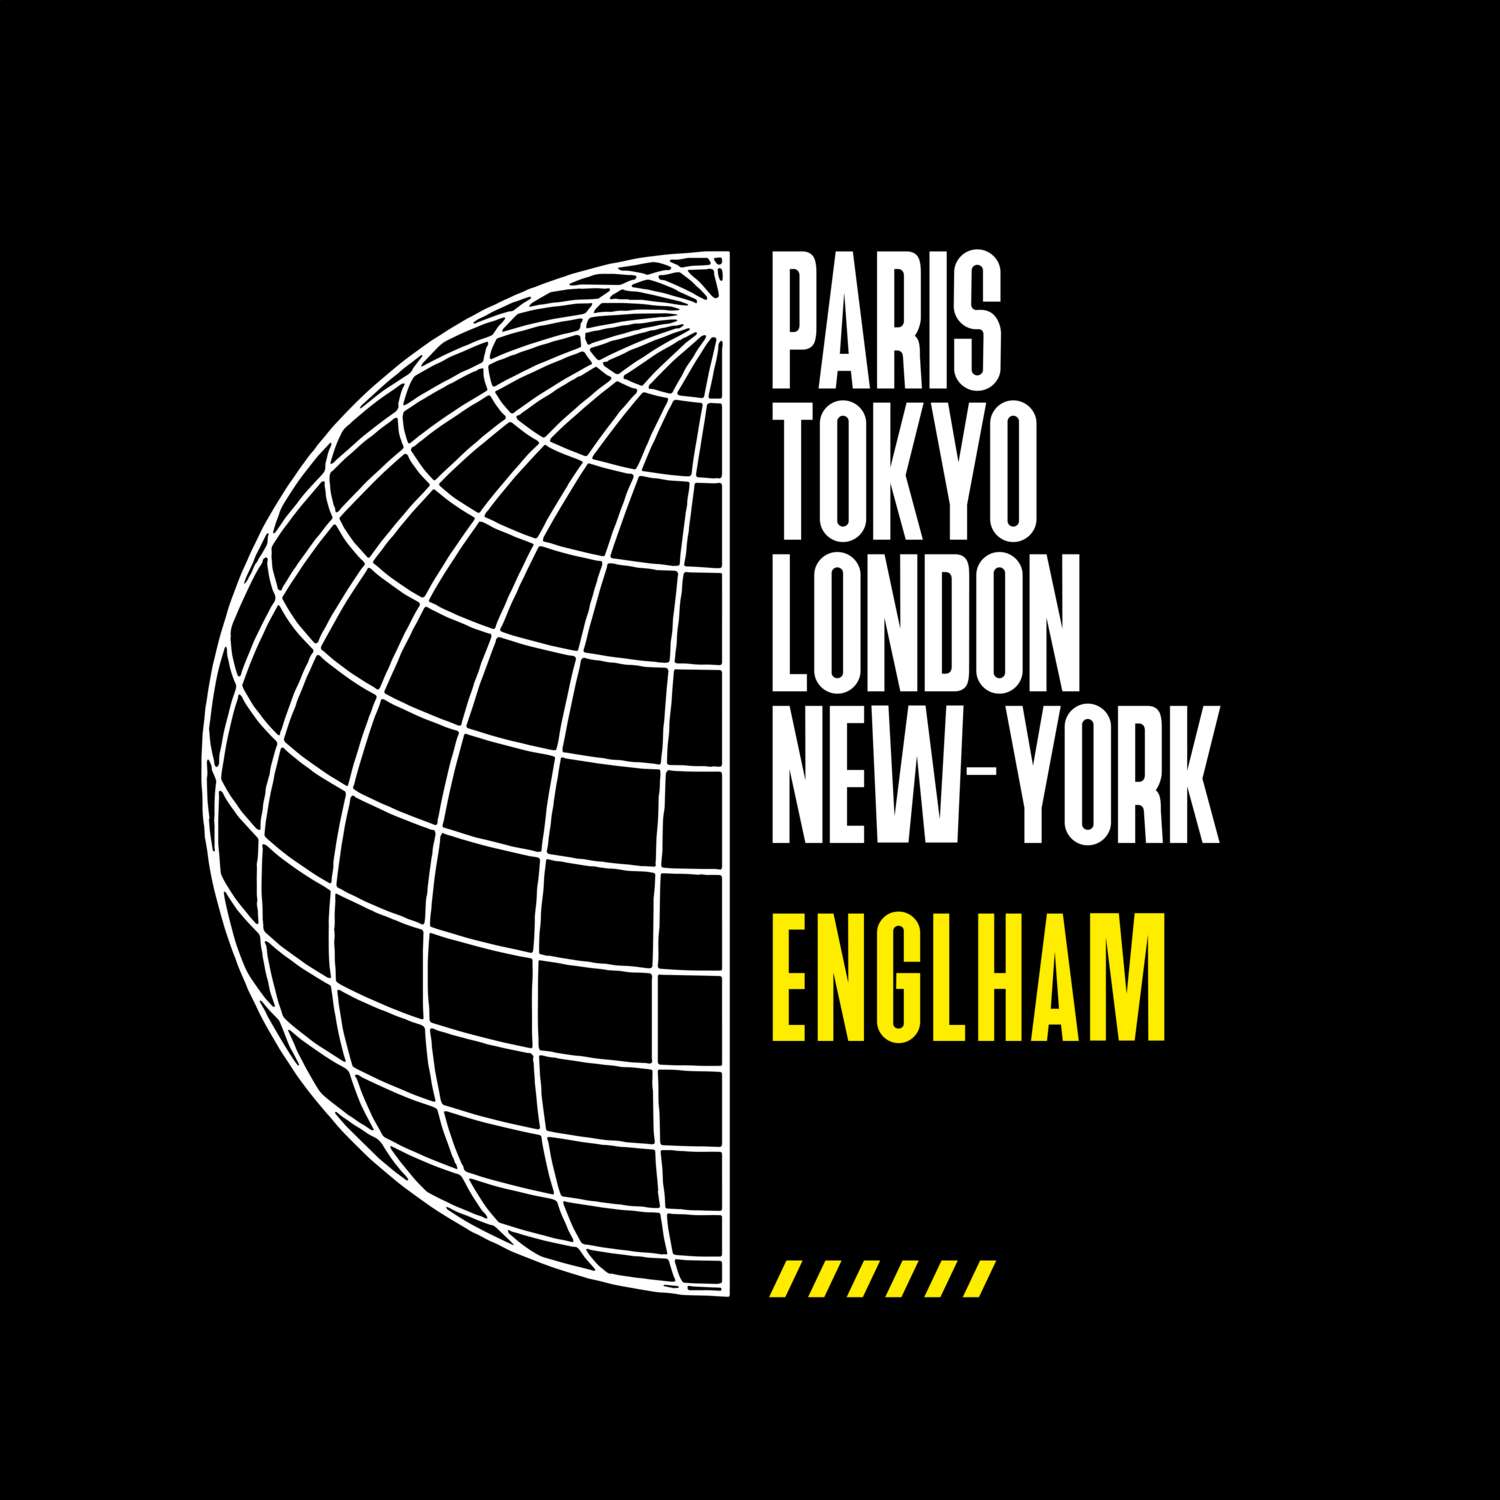 Englham T-Shirt »Paris Tokyo London«